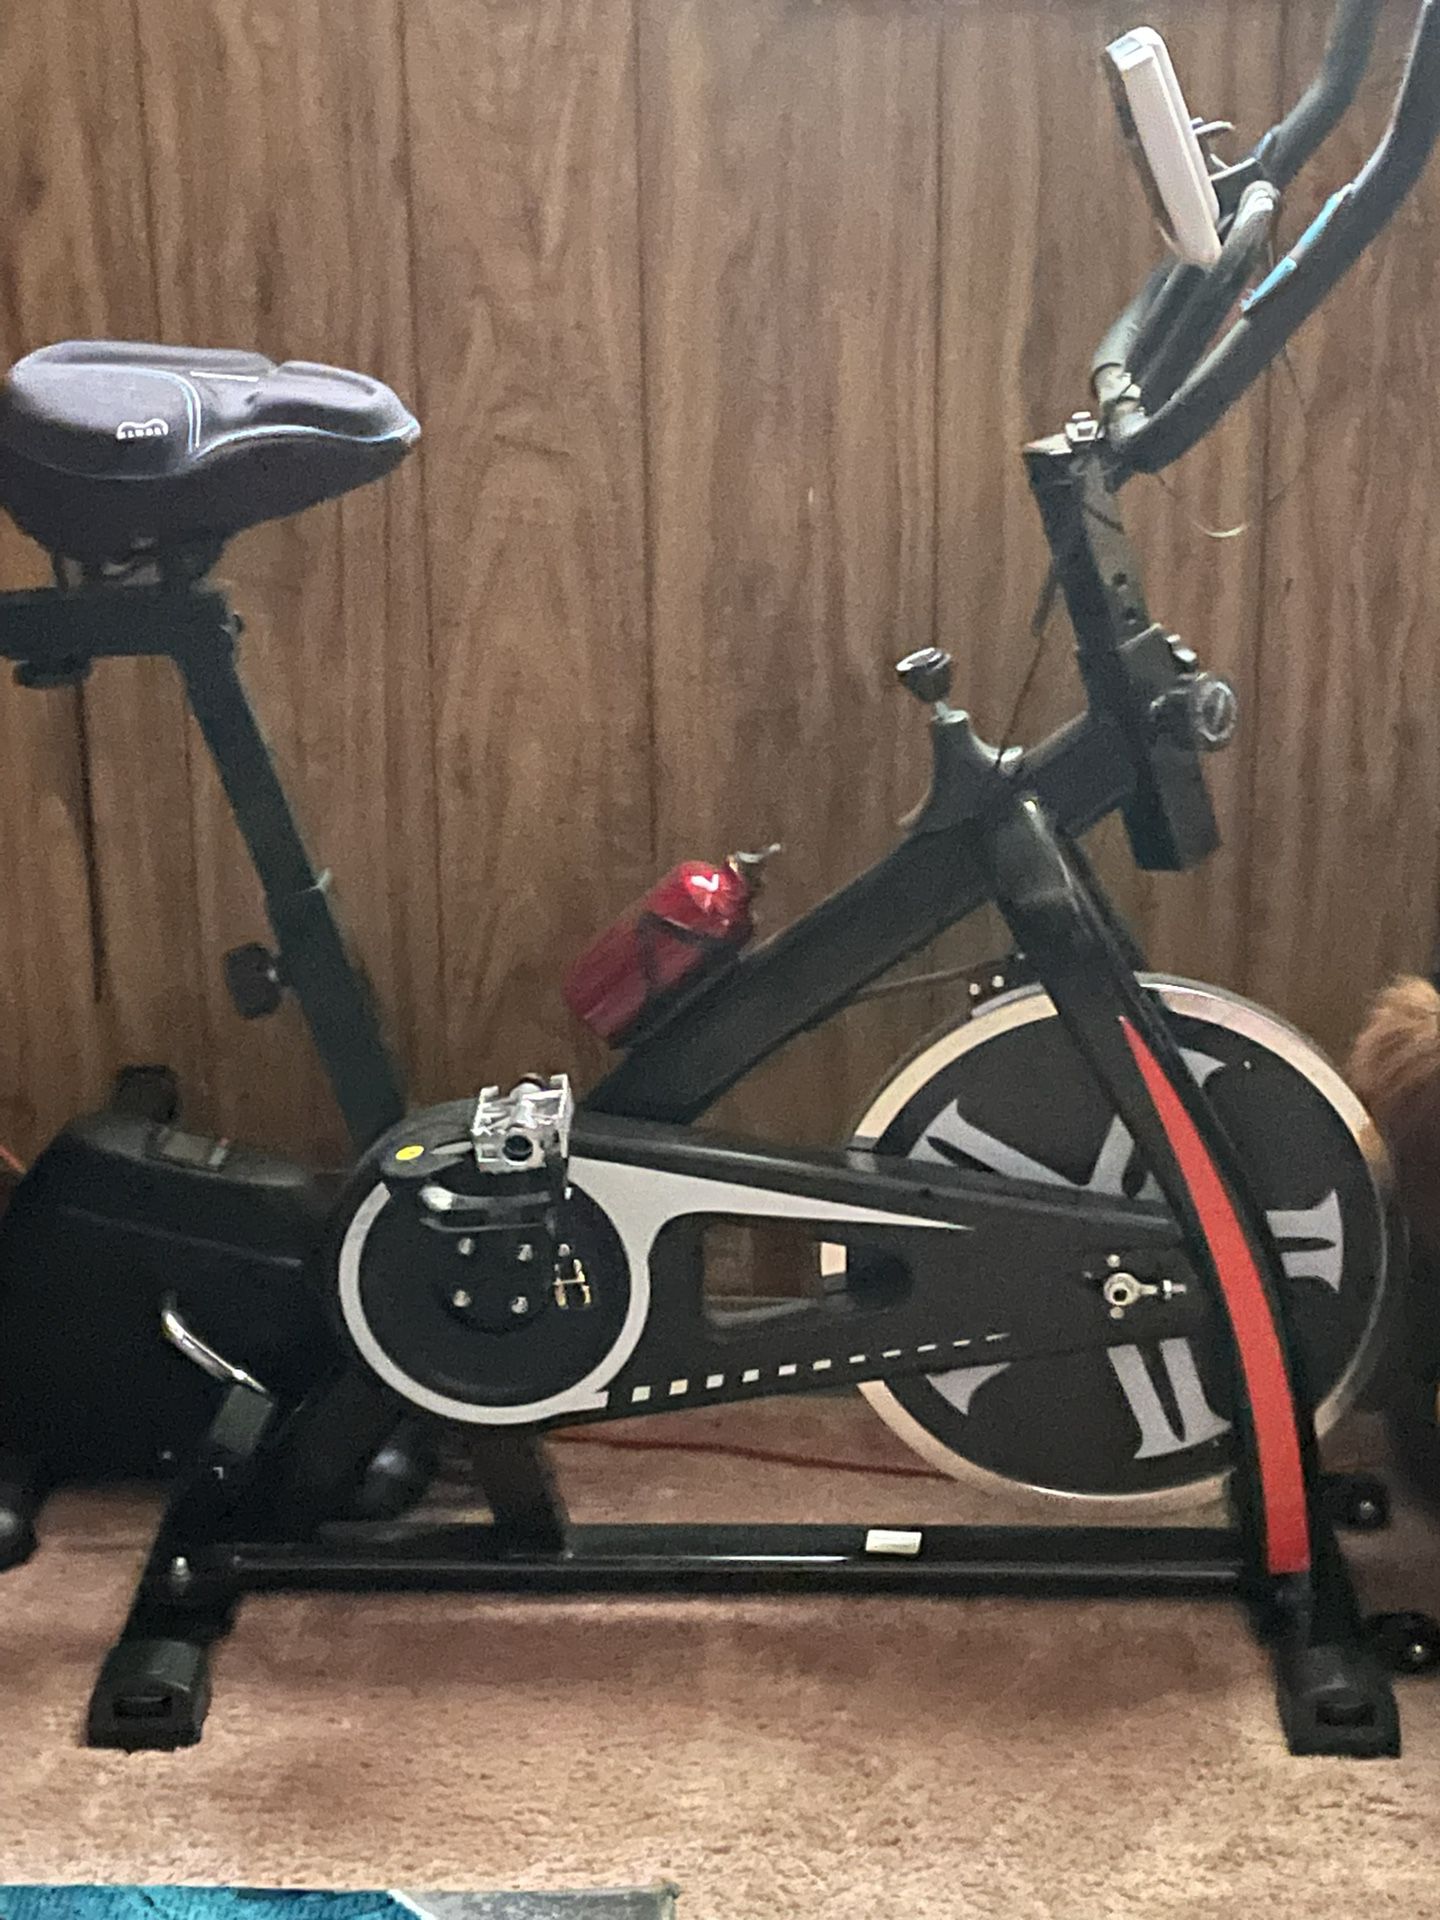 Music equipment & exercise Bike 